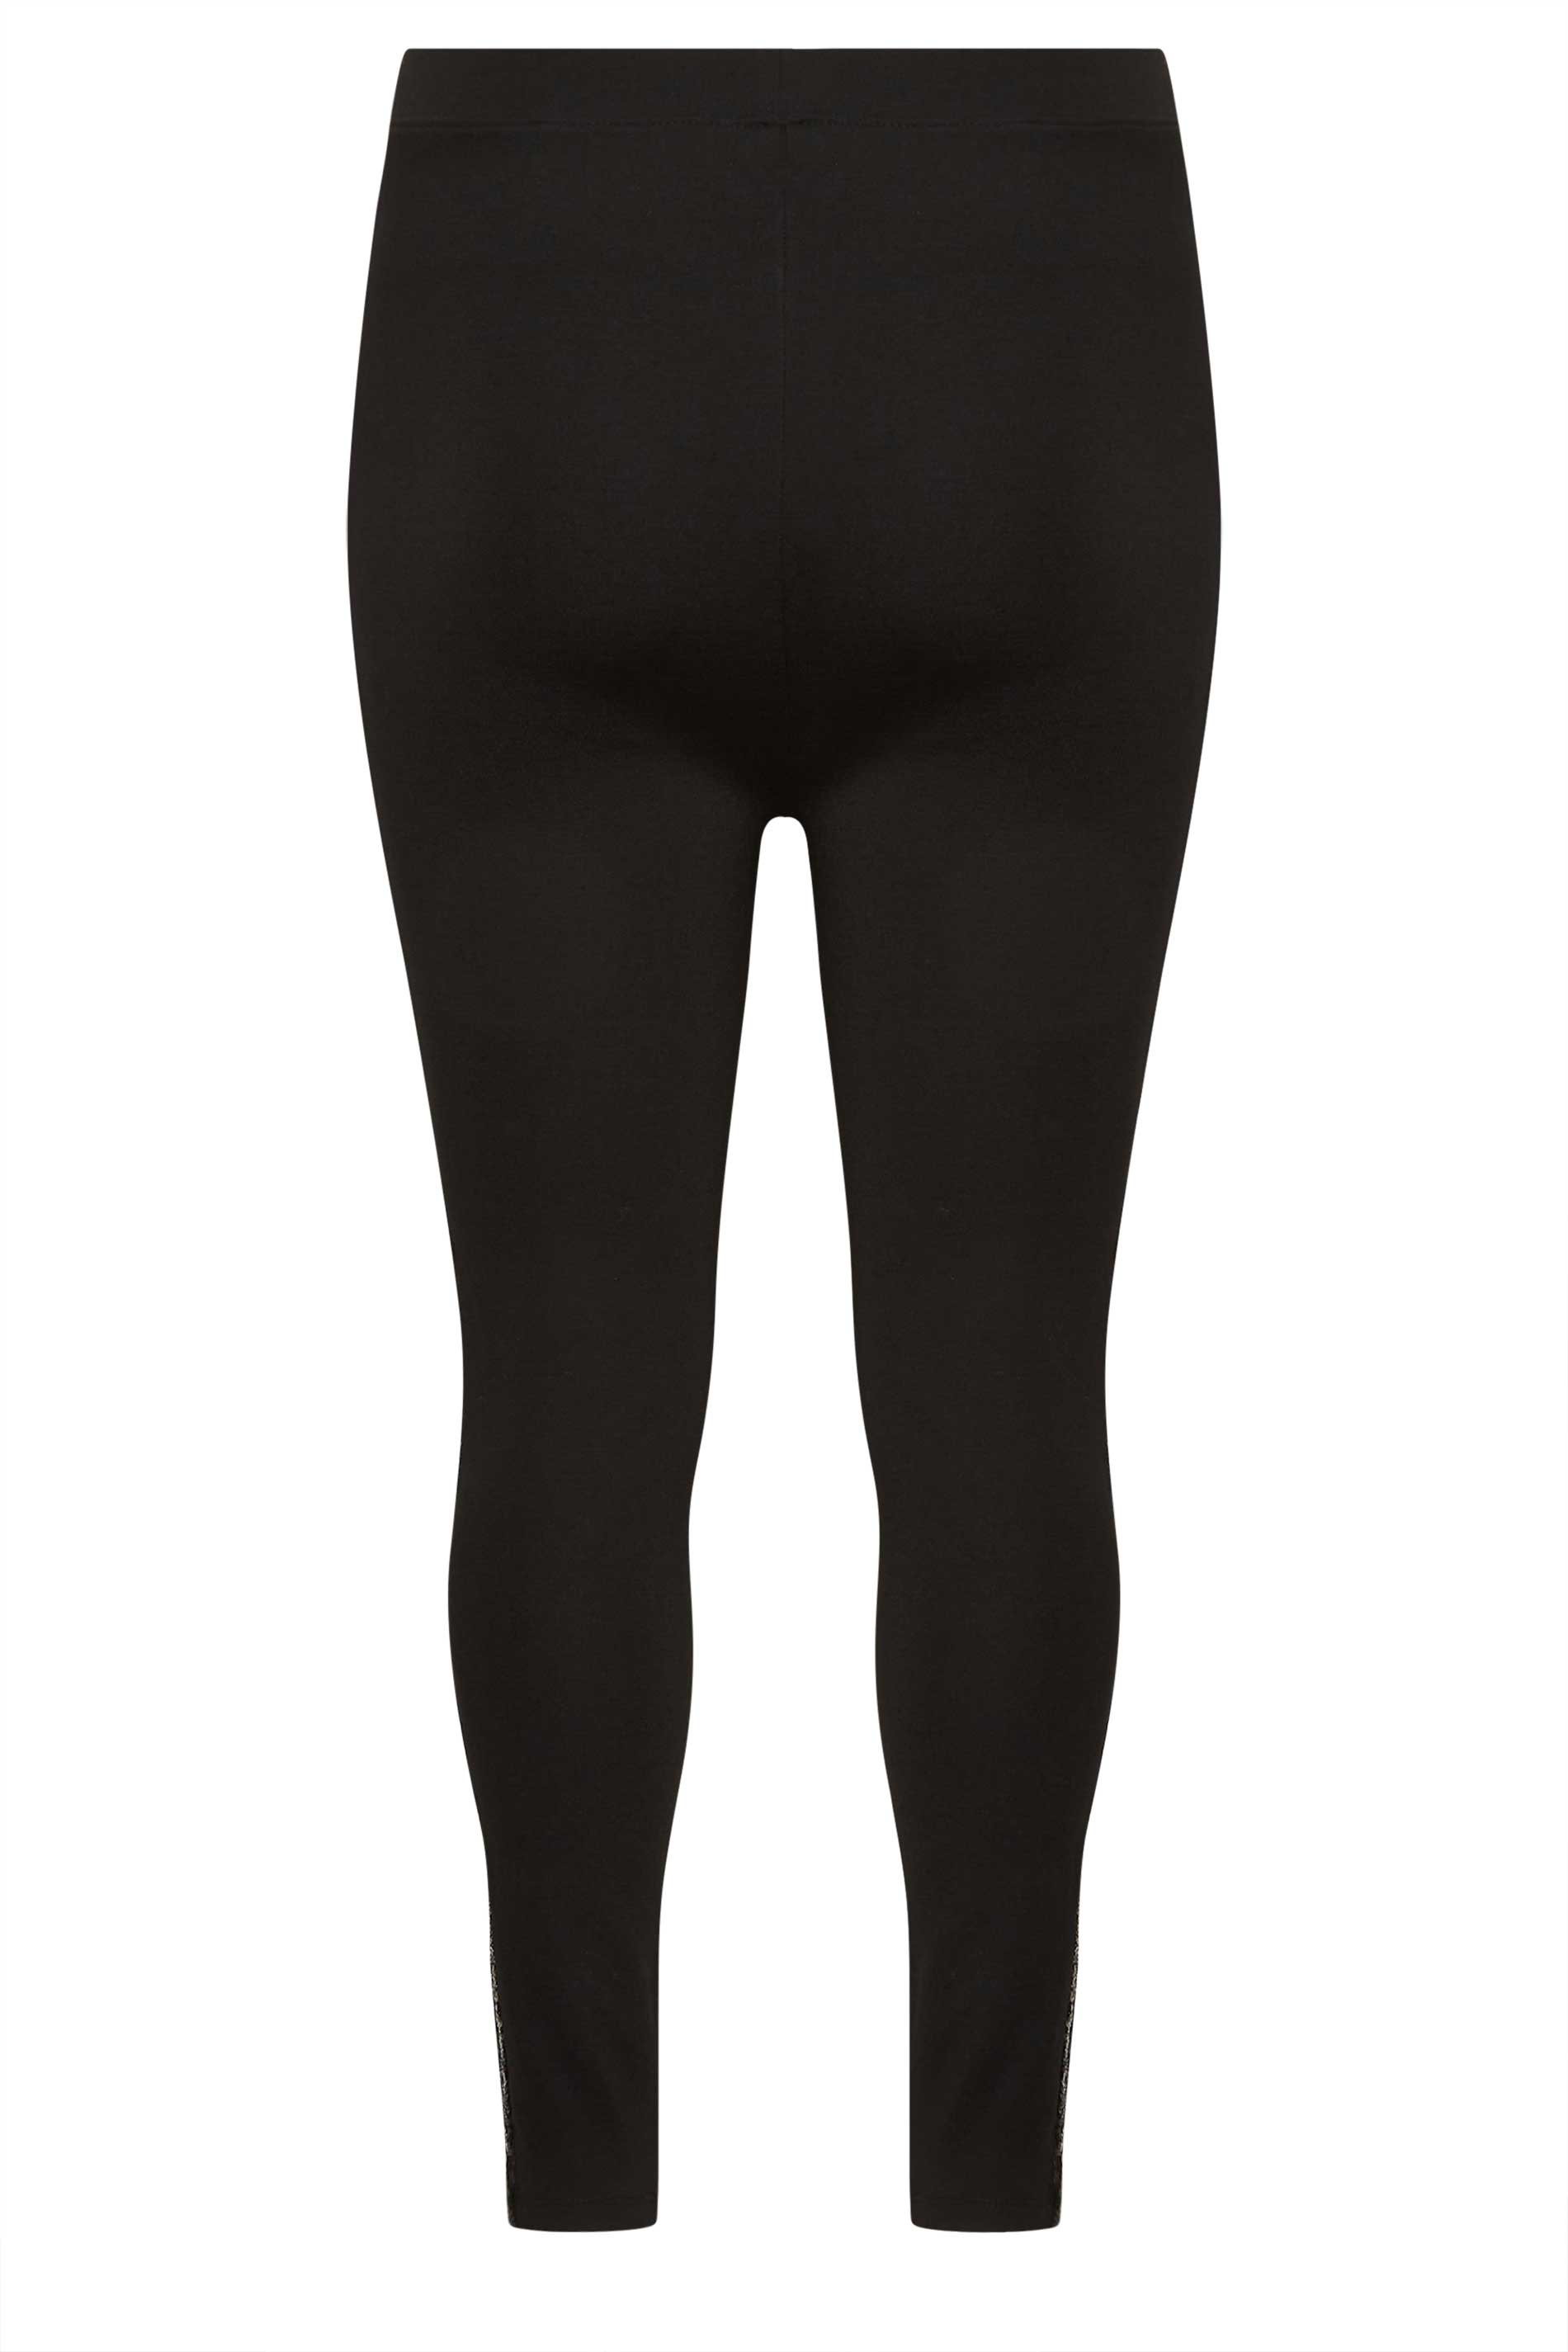 Yours Clothing SIDE STRIPE ACTIVE - Leggings - Trousers - Black/black -  Zalando.de